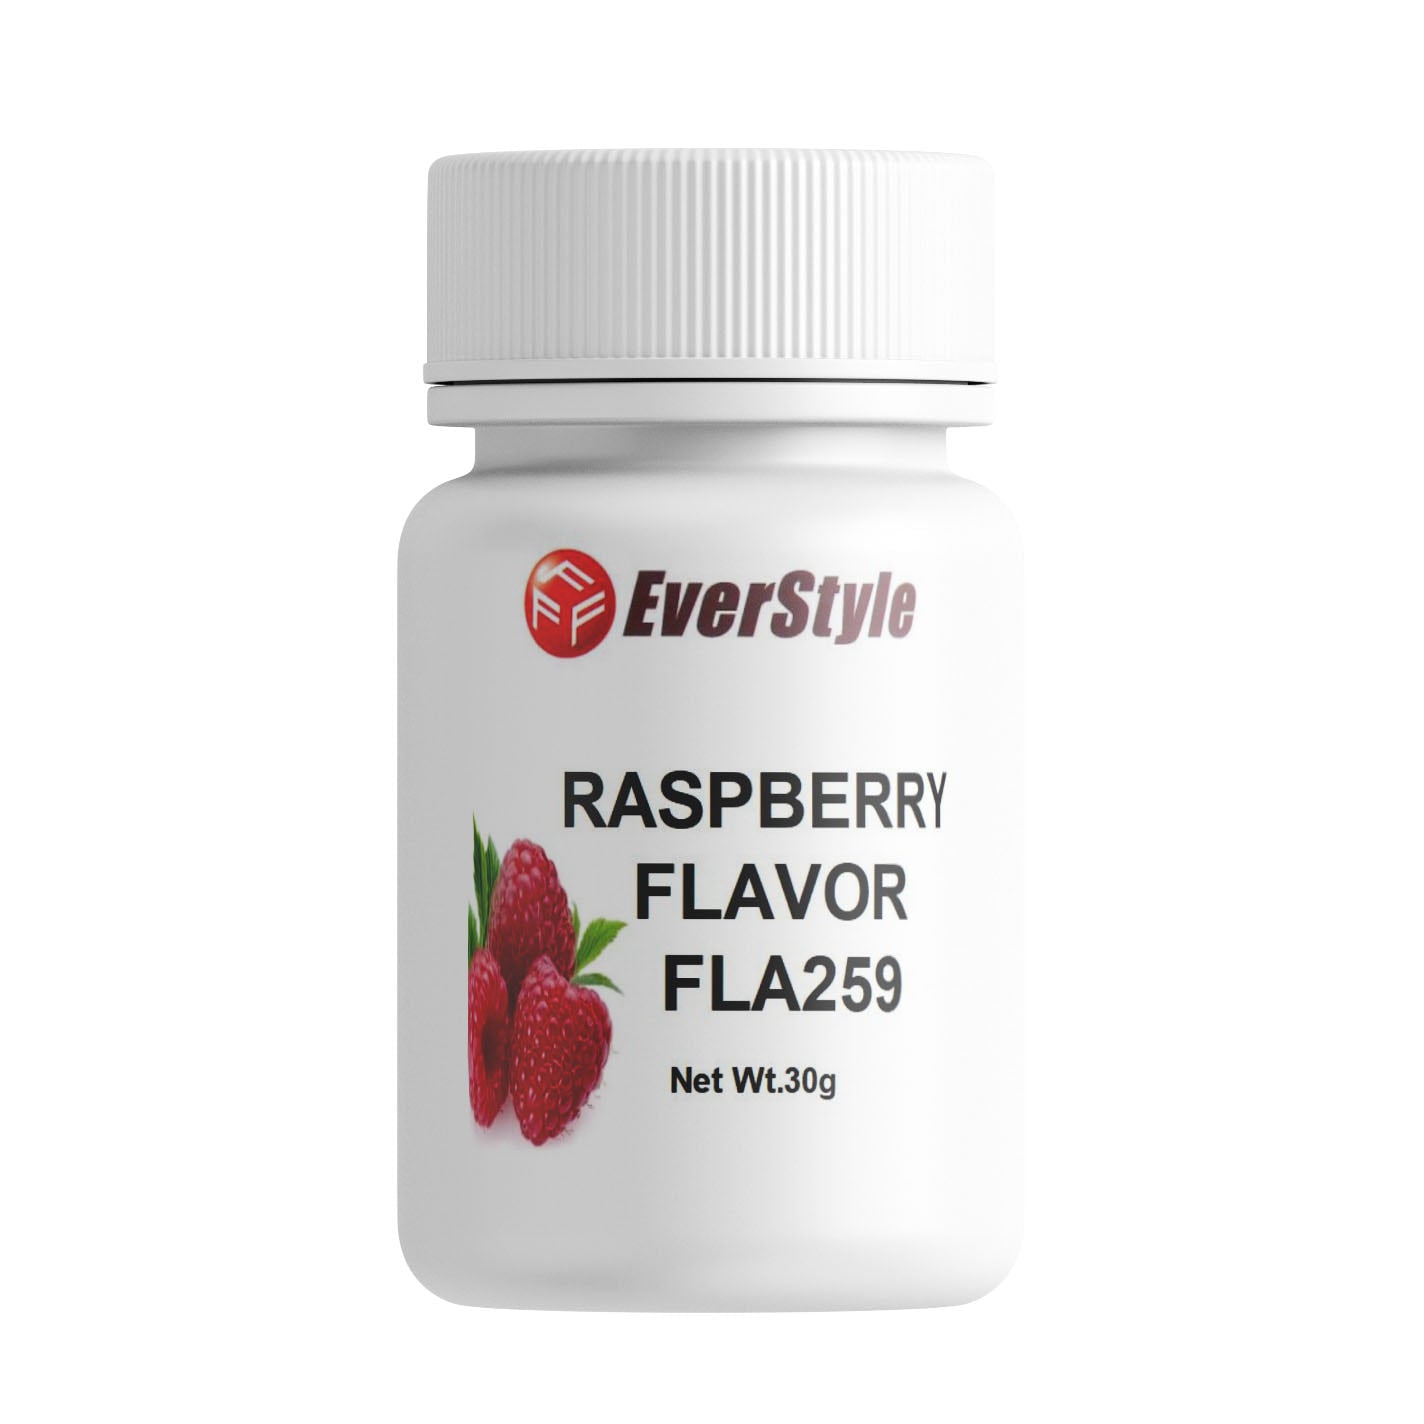 Everstyle Raspberry Flavor 30g (FLA259)